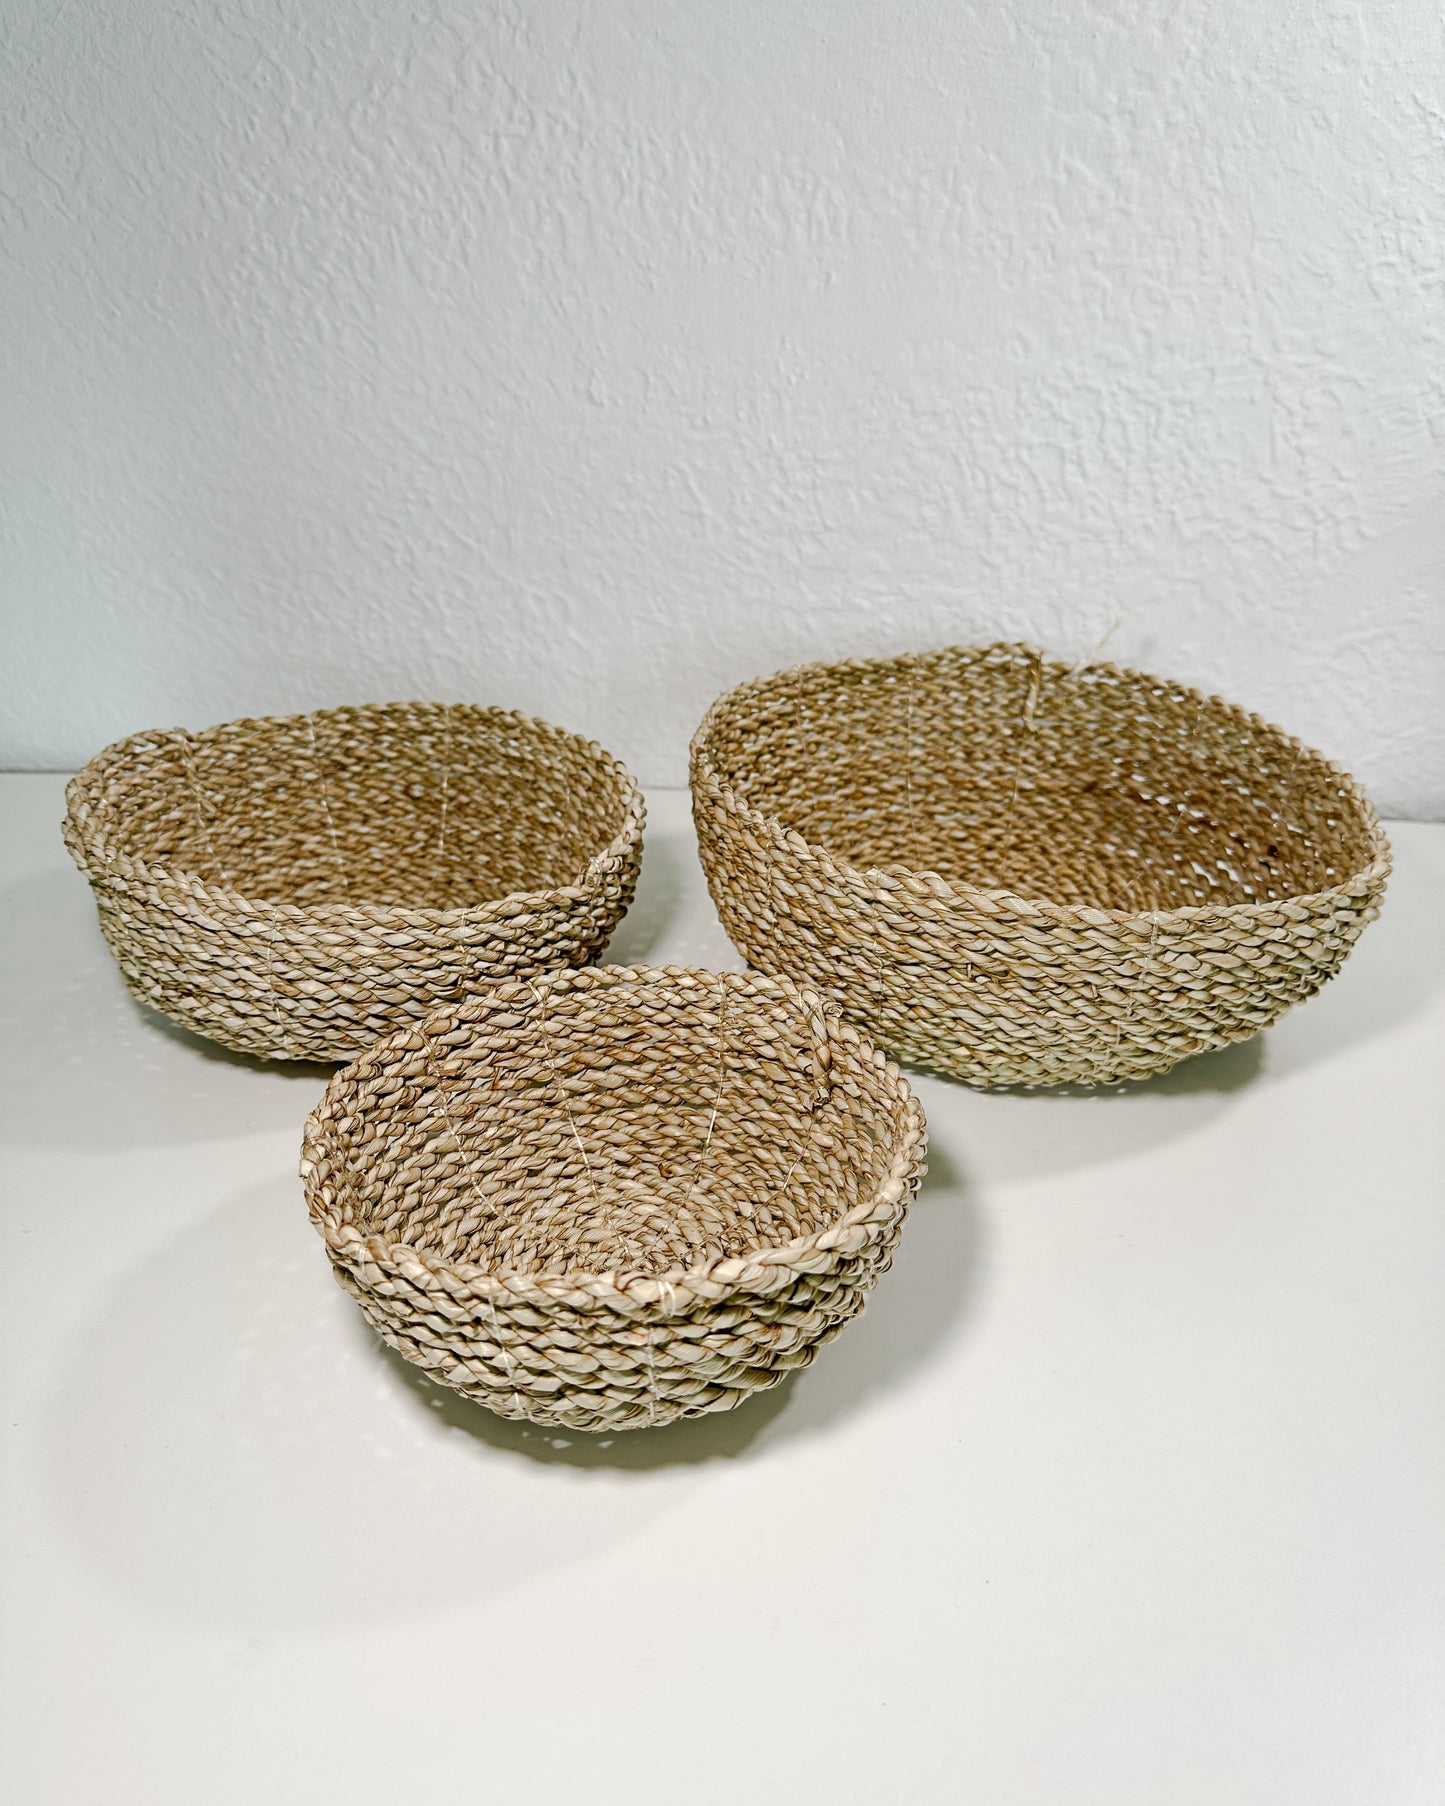 Mimpi Handwoven Bread Baskets (Set of 3) - Natural